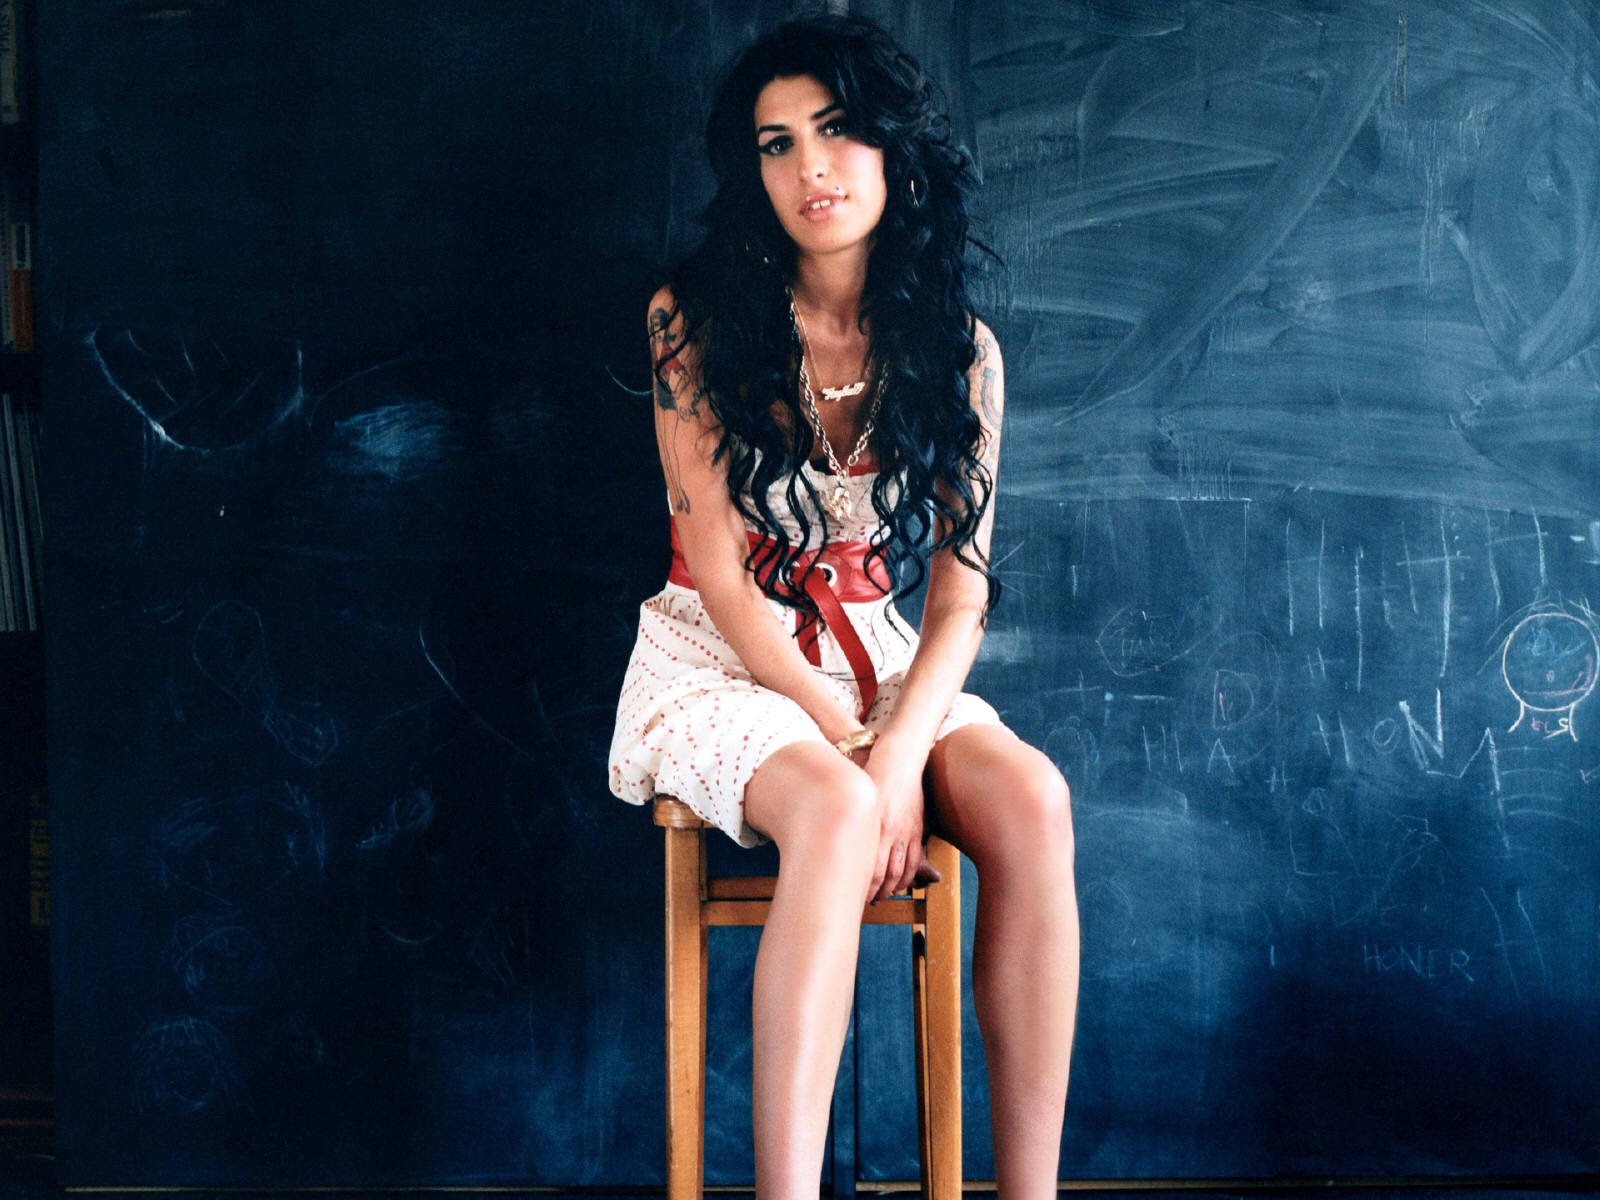 Fond d'ecran Amy Winehouse assise